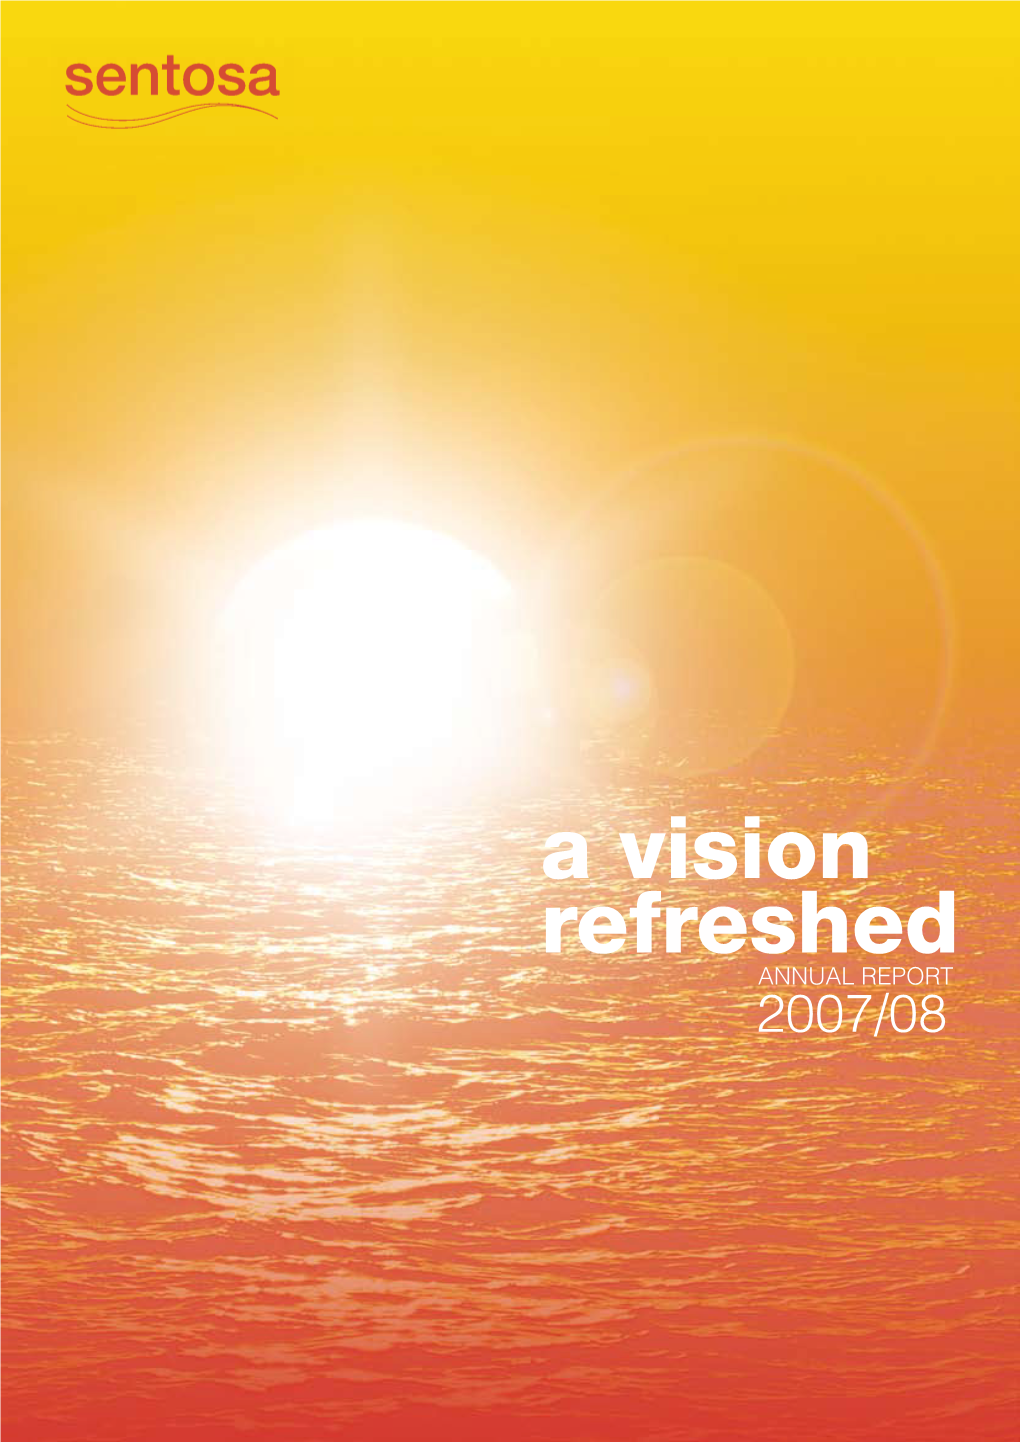 Sentosa Annual Report 2007/08